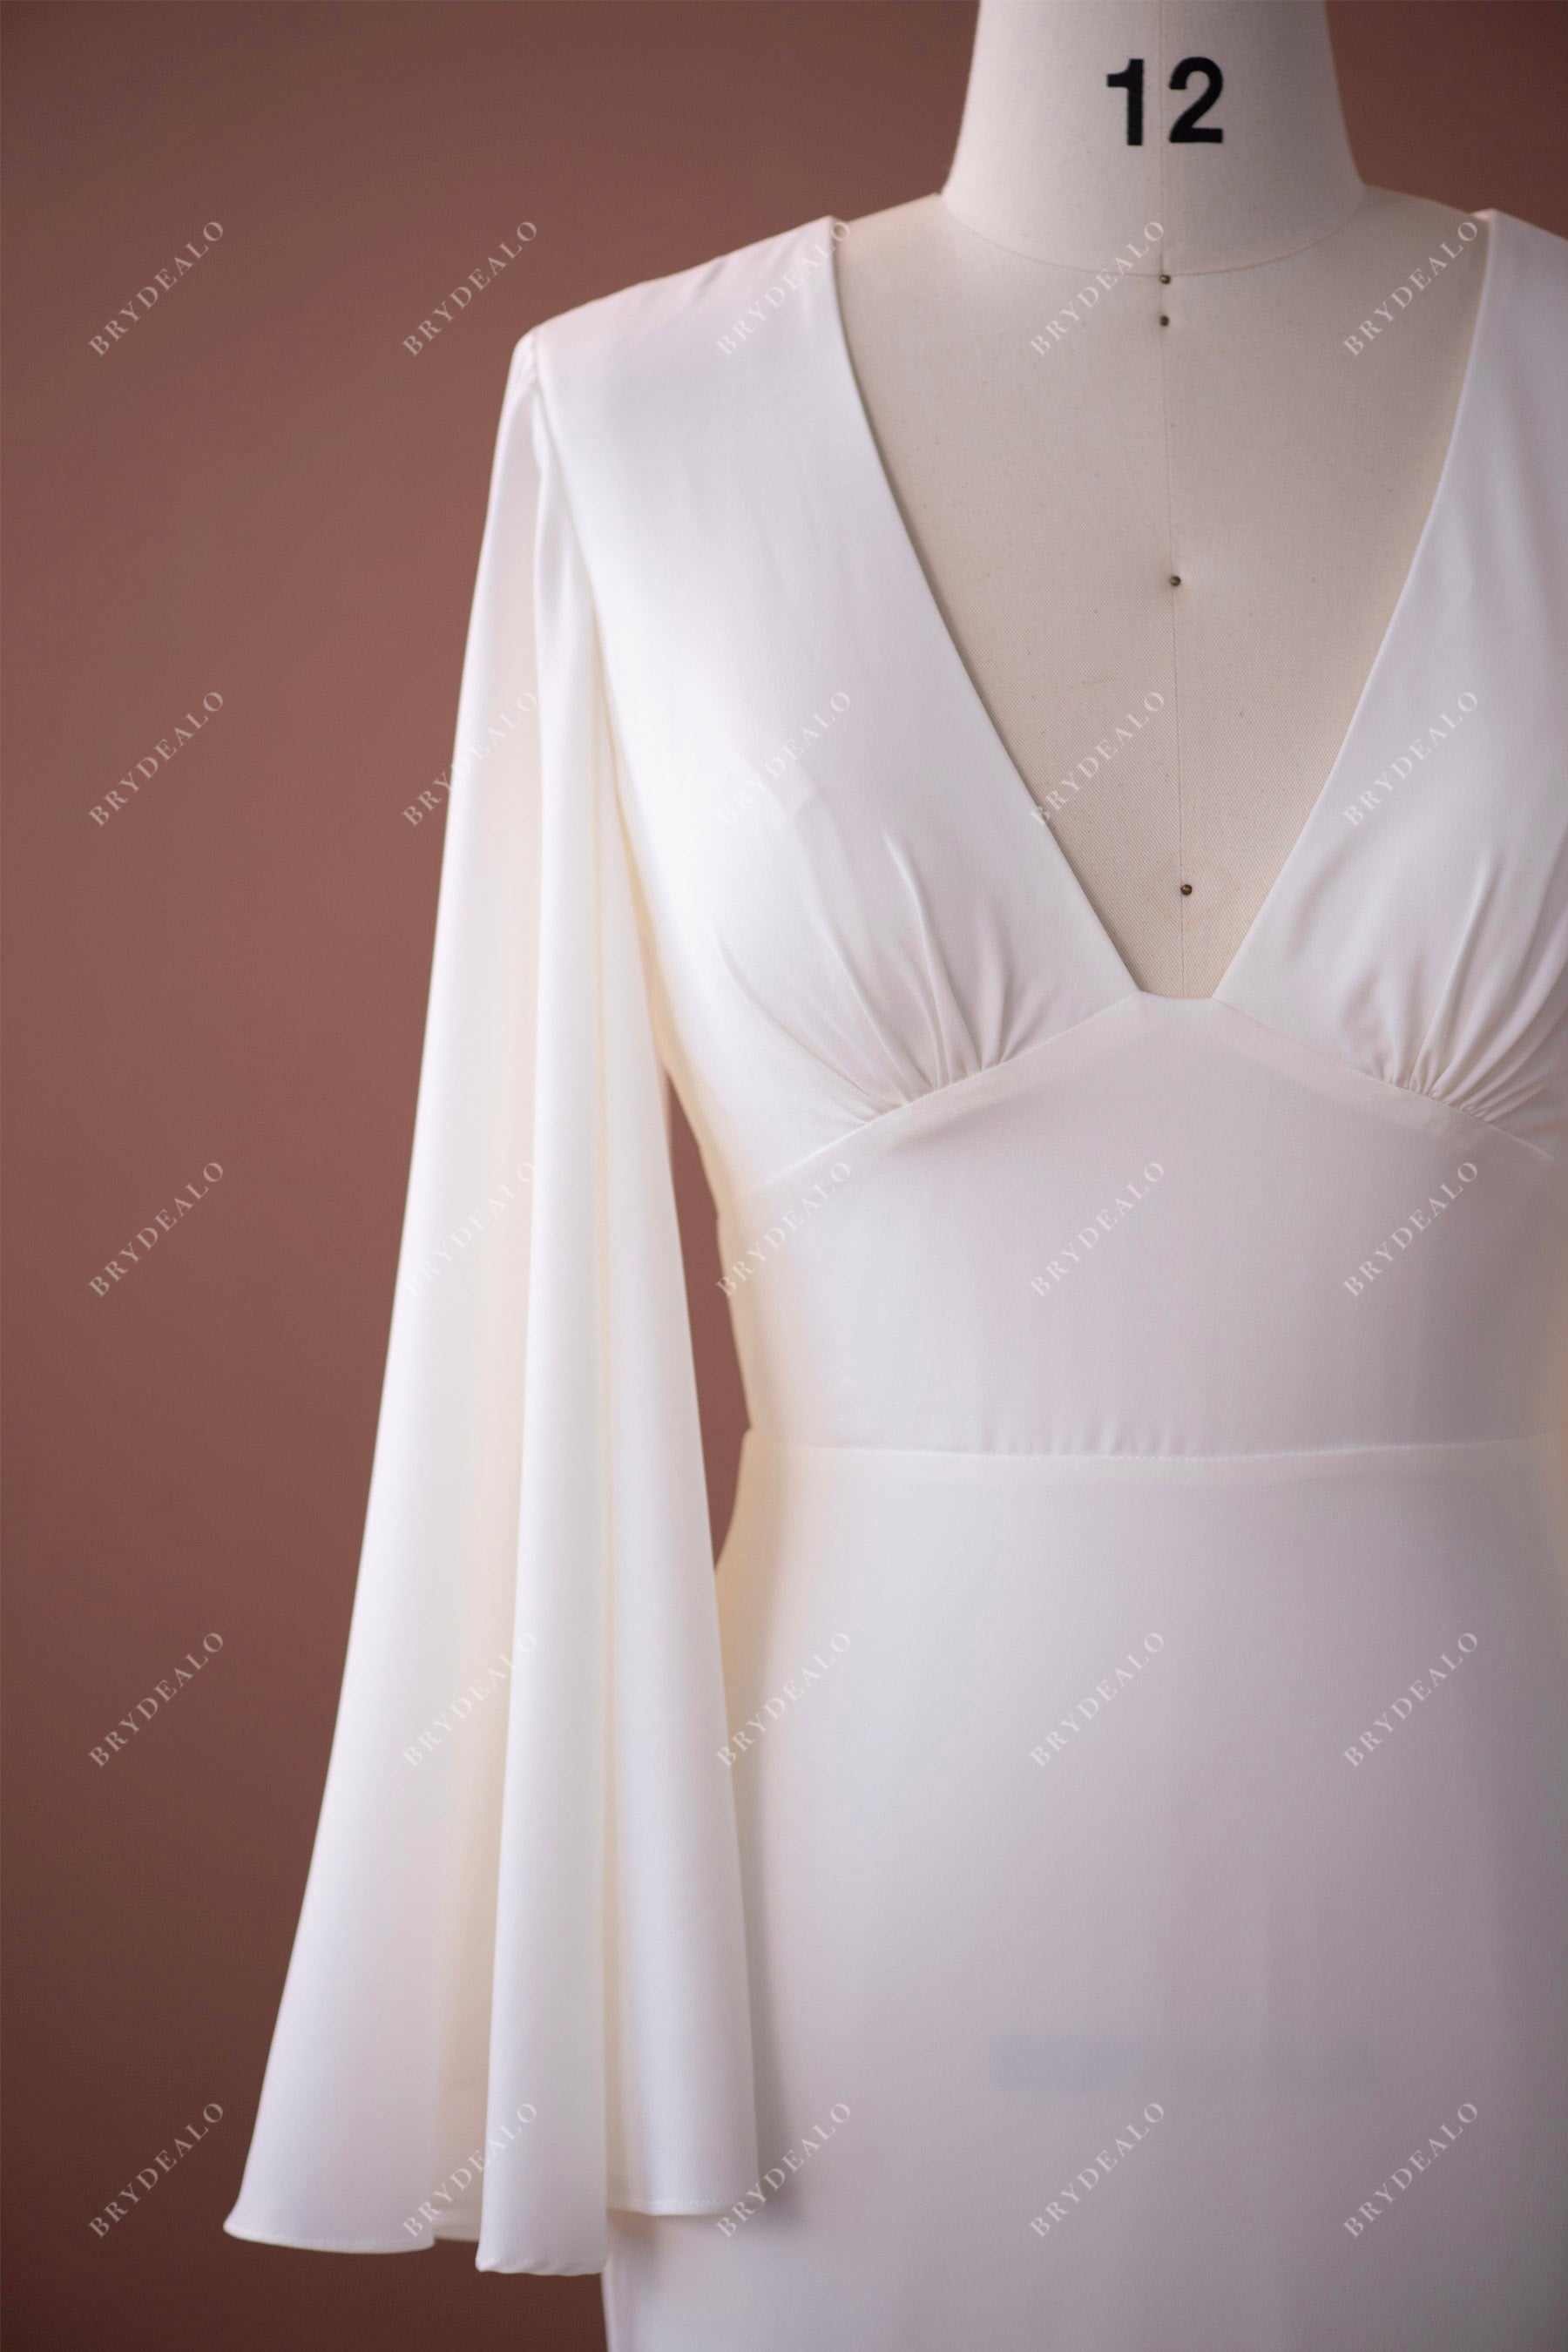 V-neck empire waist bell sleeve wedding gown